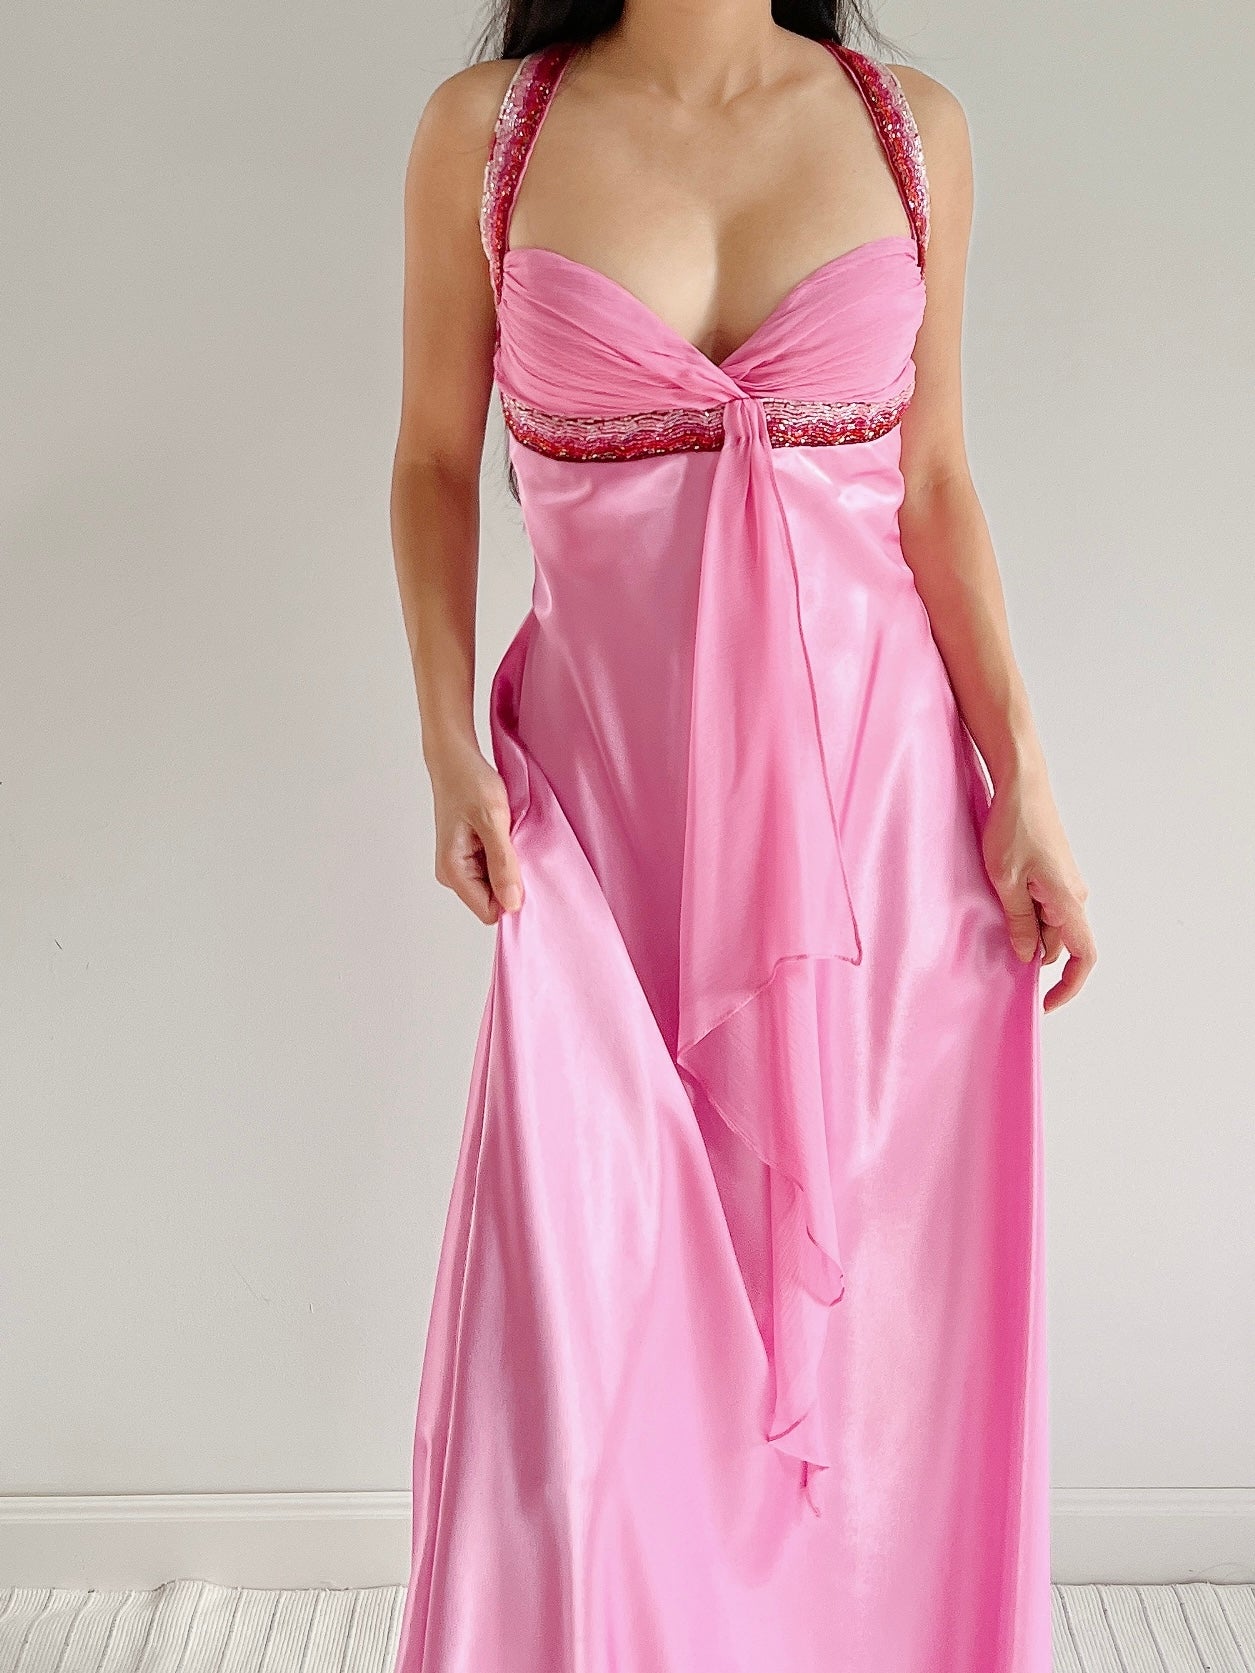 Y2K Hot Pink Satin Gown - M